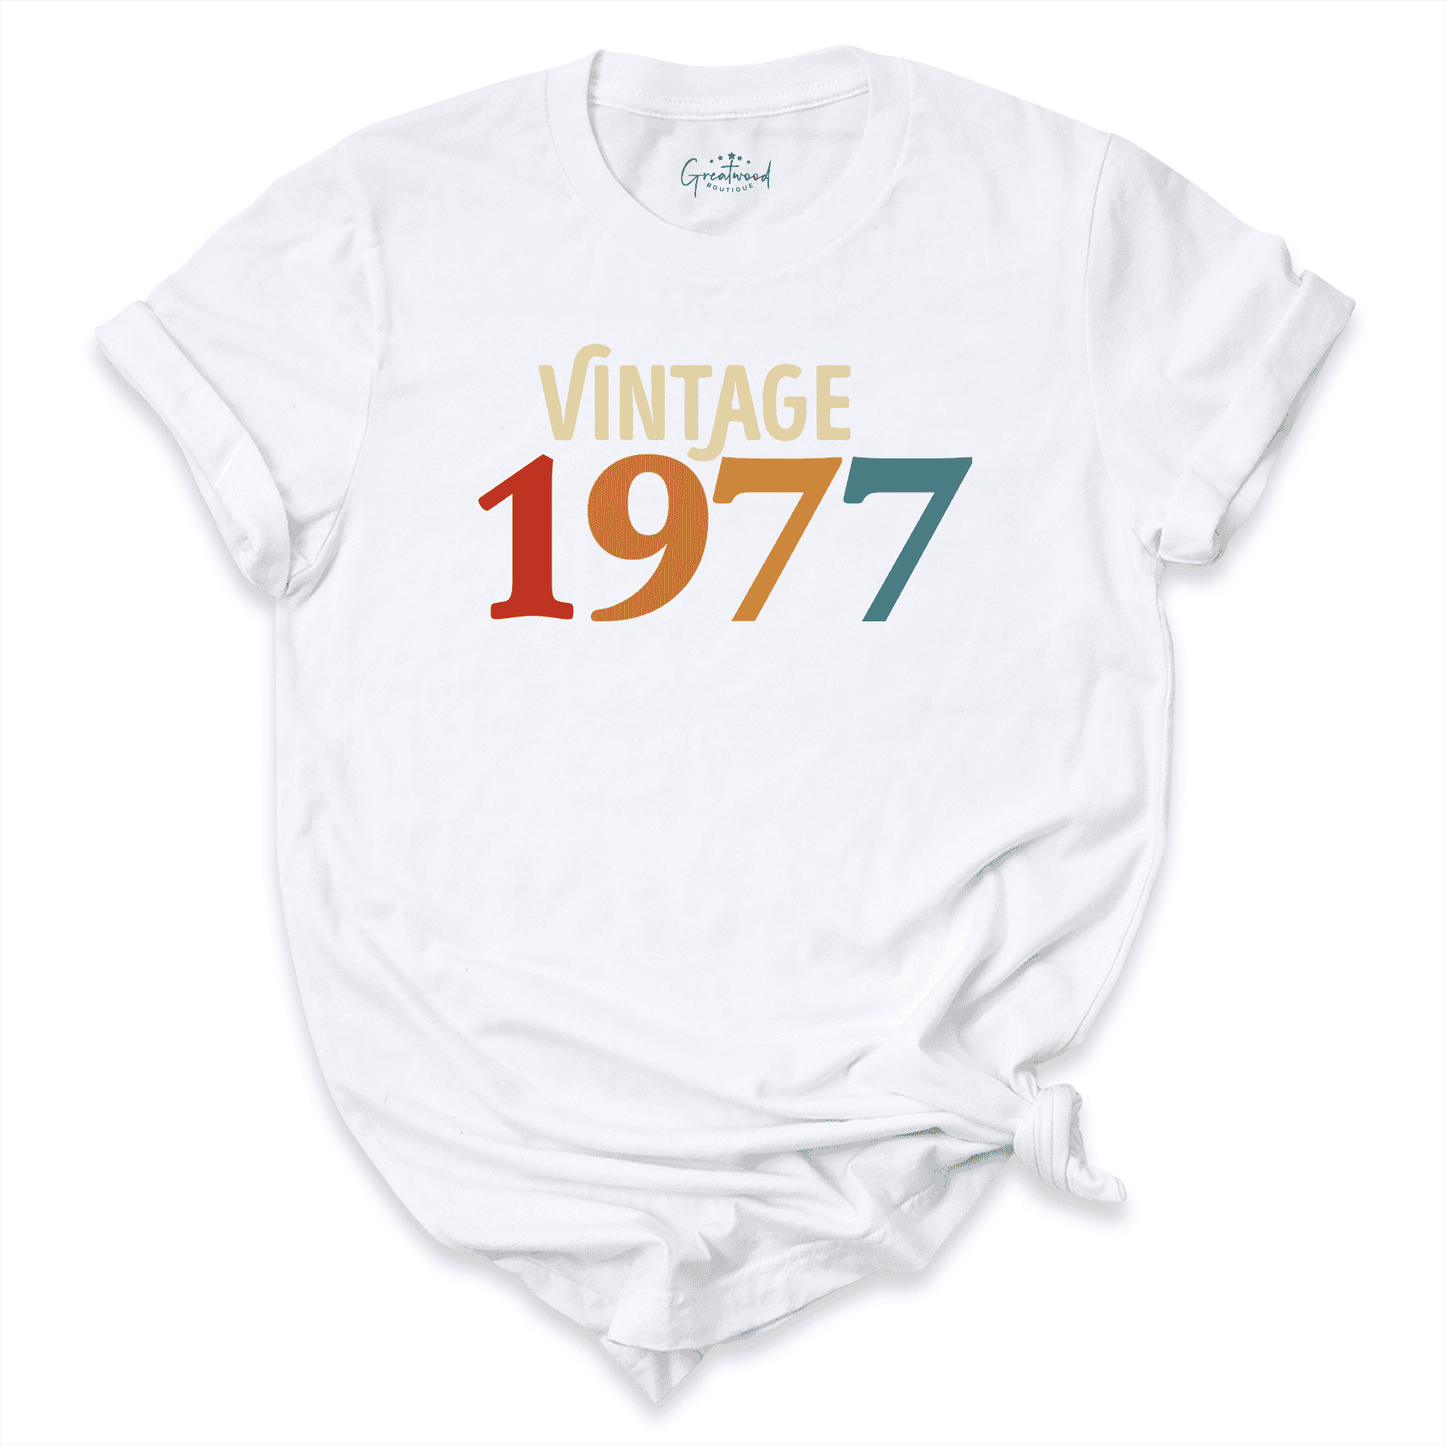 1977 Vintage Shirt